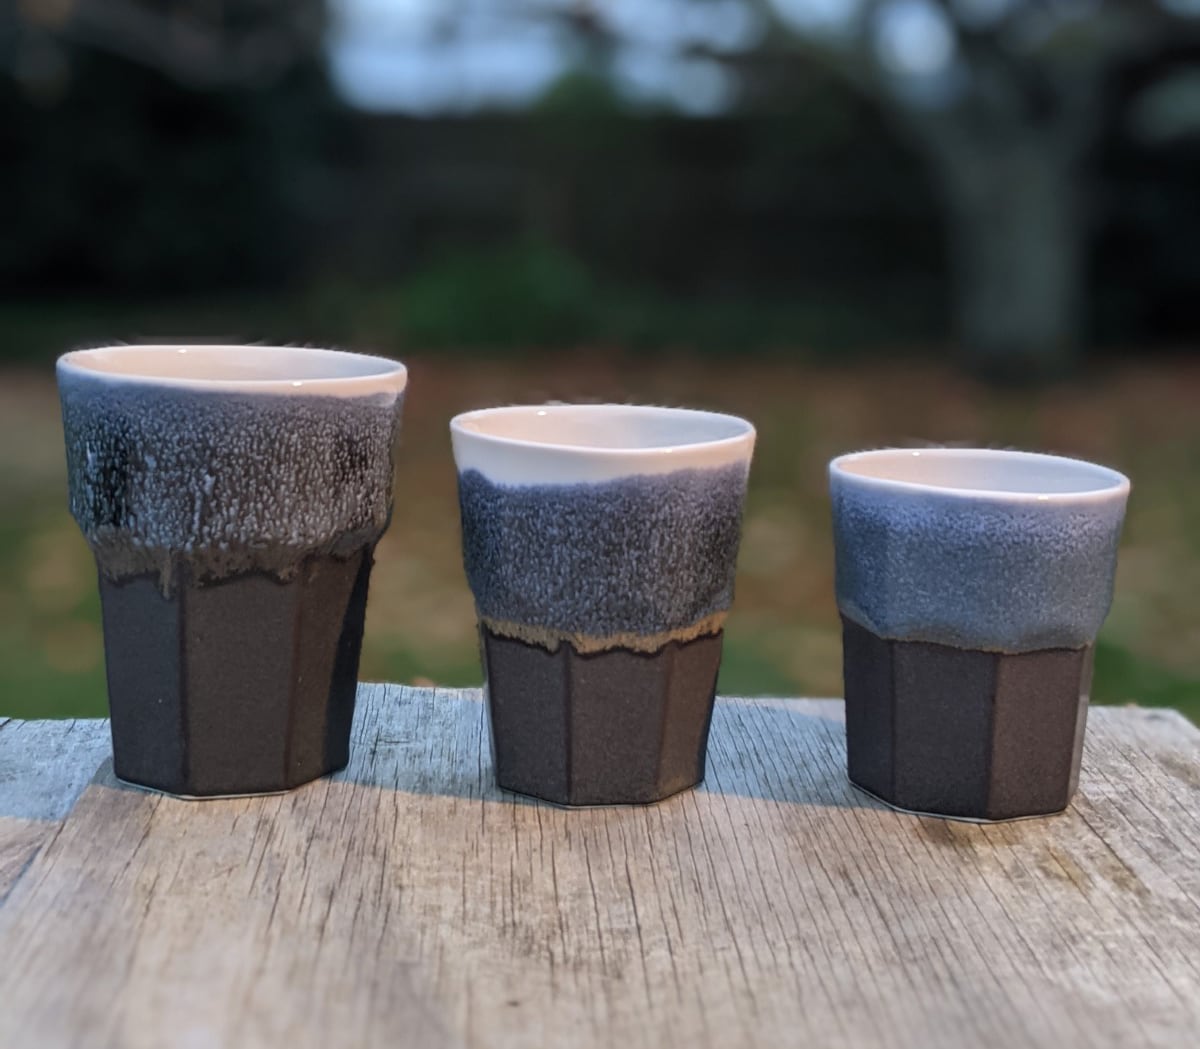 3 Cups On Wood Lisa Donaldson Ceramics